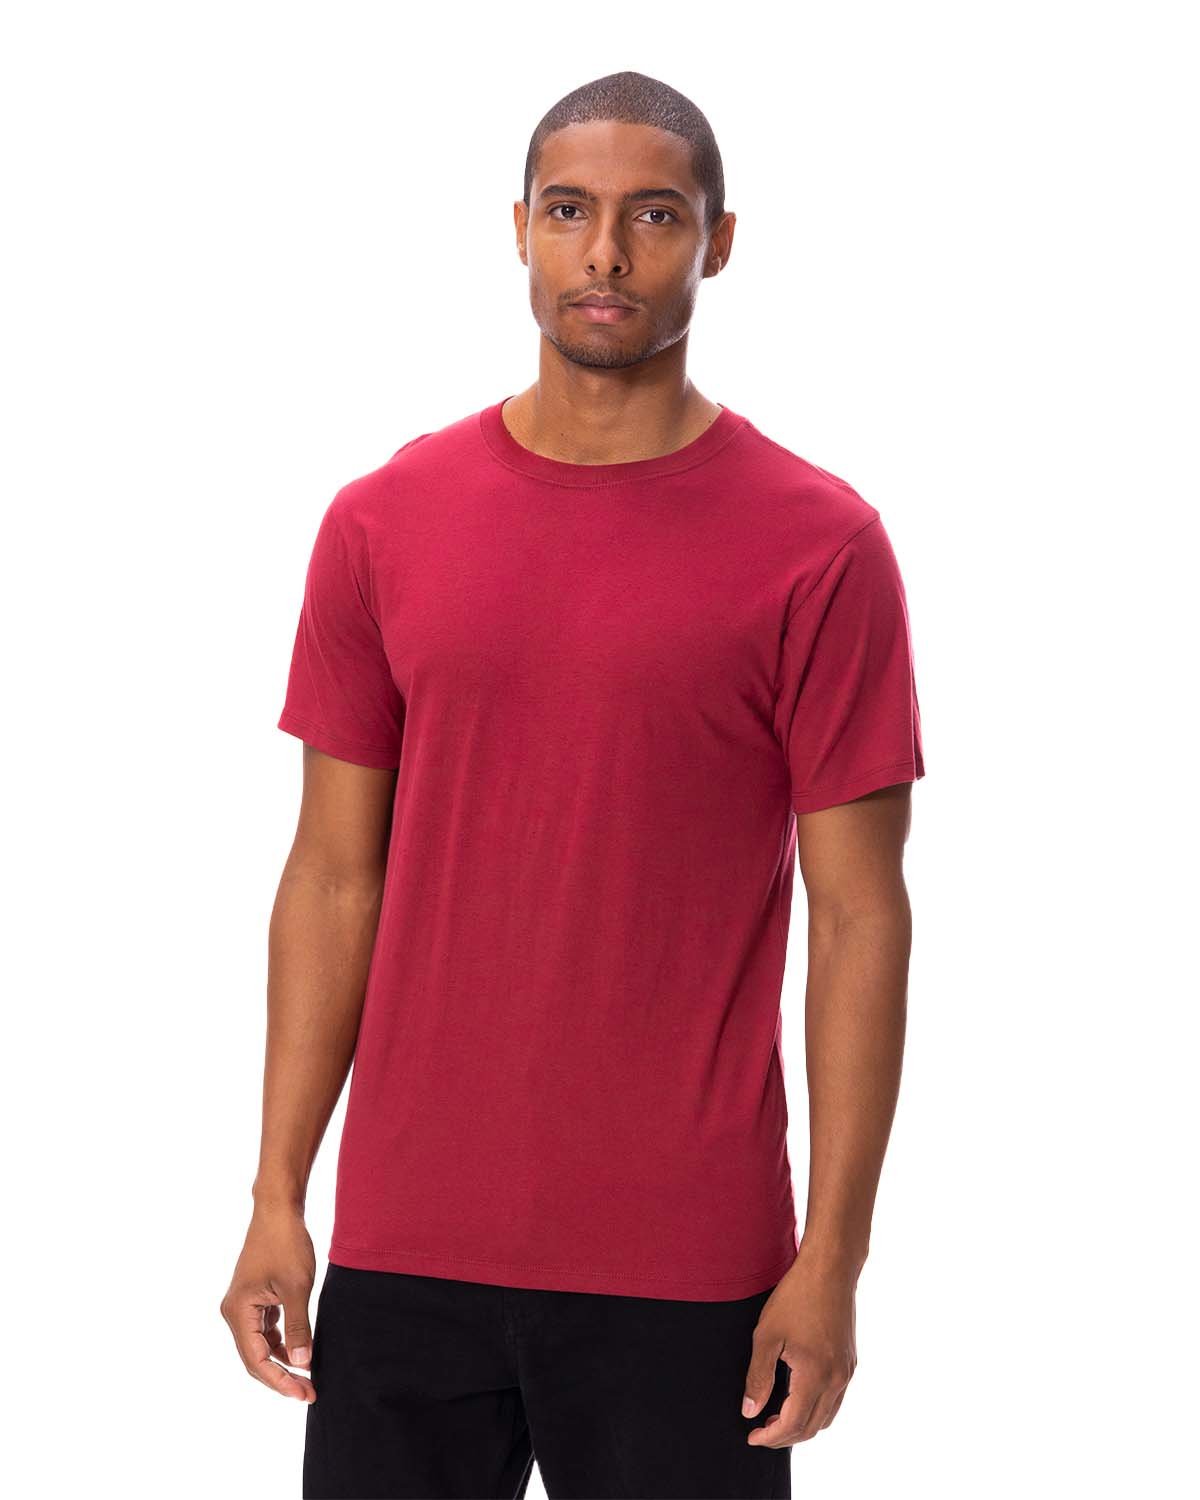 Threadfast Apparel Unisex Ultimate Cotton T-Shirt burgundy 